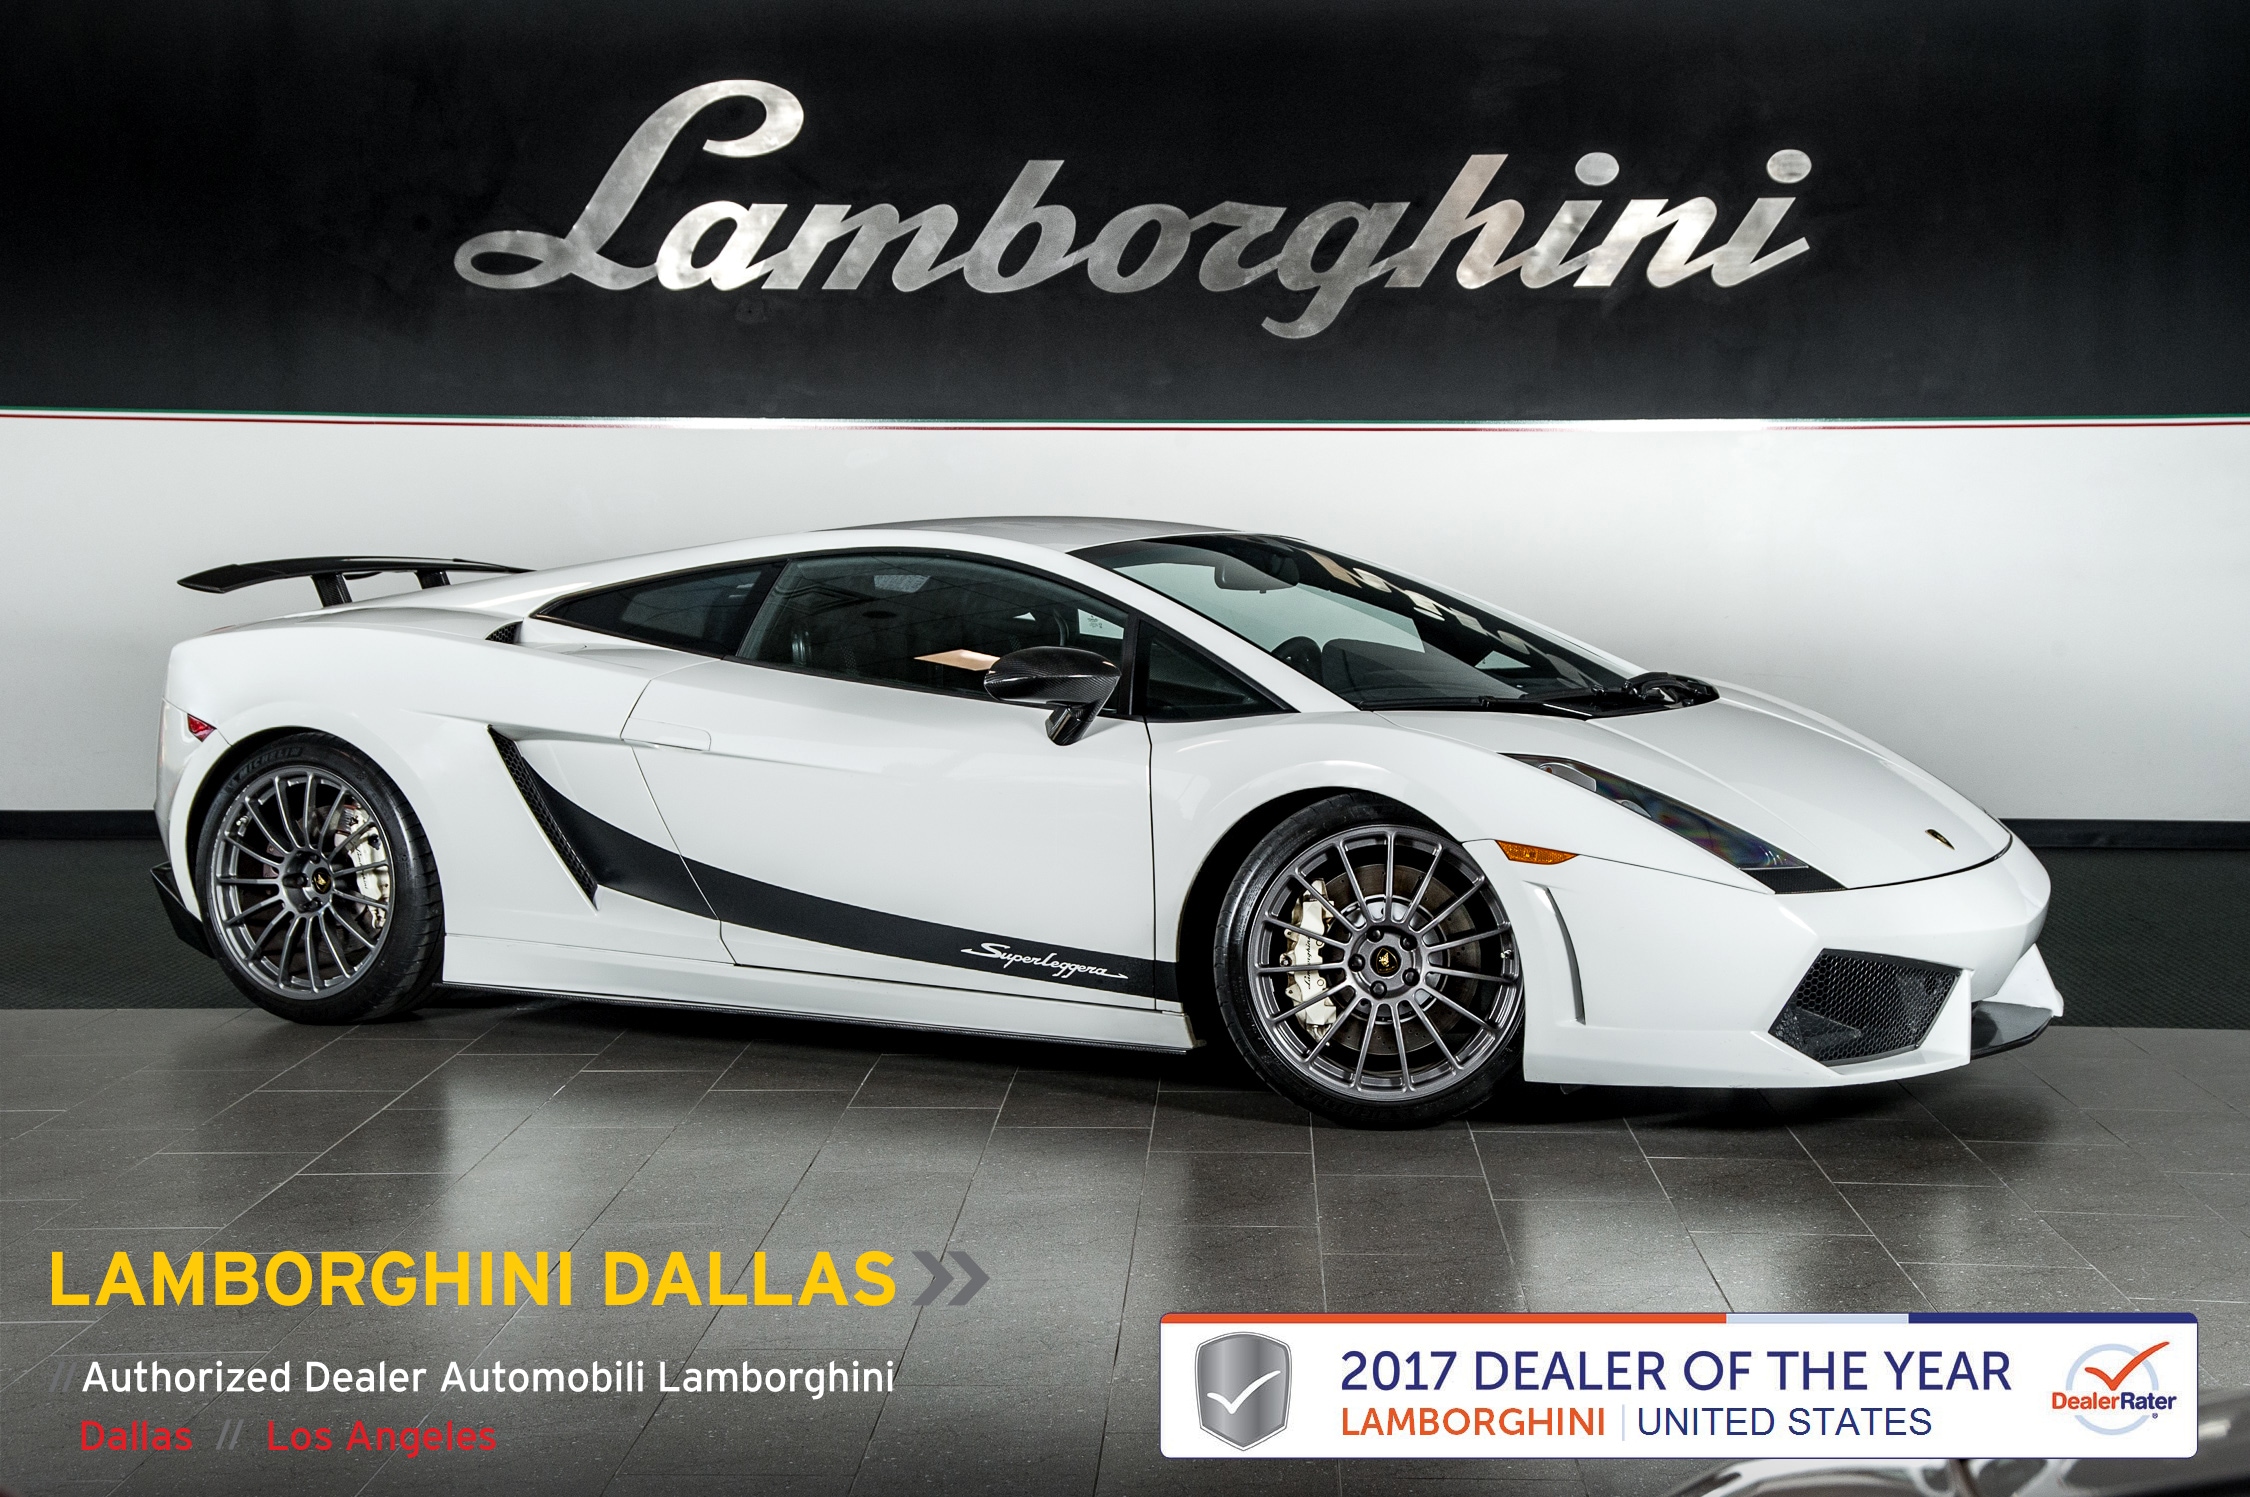 Used 2008 Lamborghini Gallardo For Sale at LAMBORGHINI 